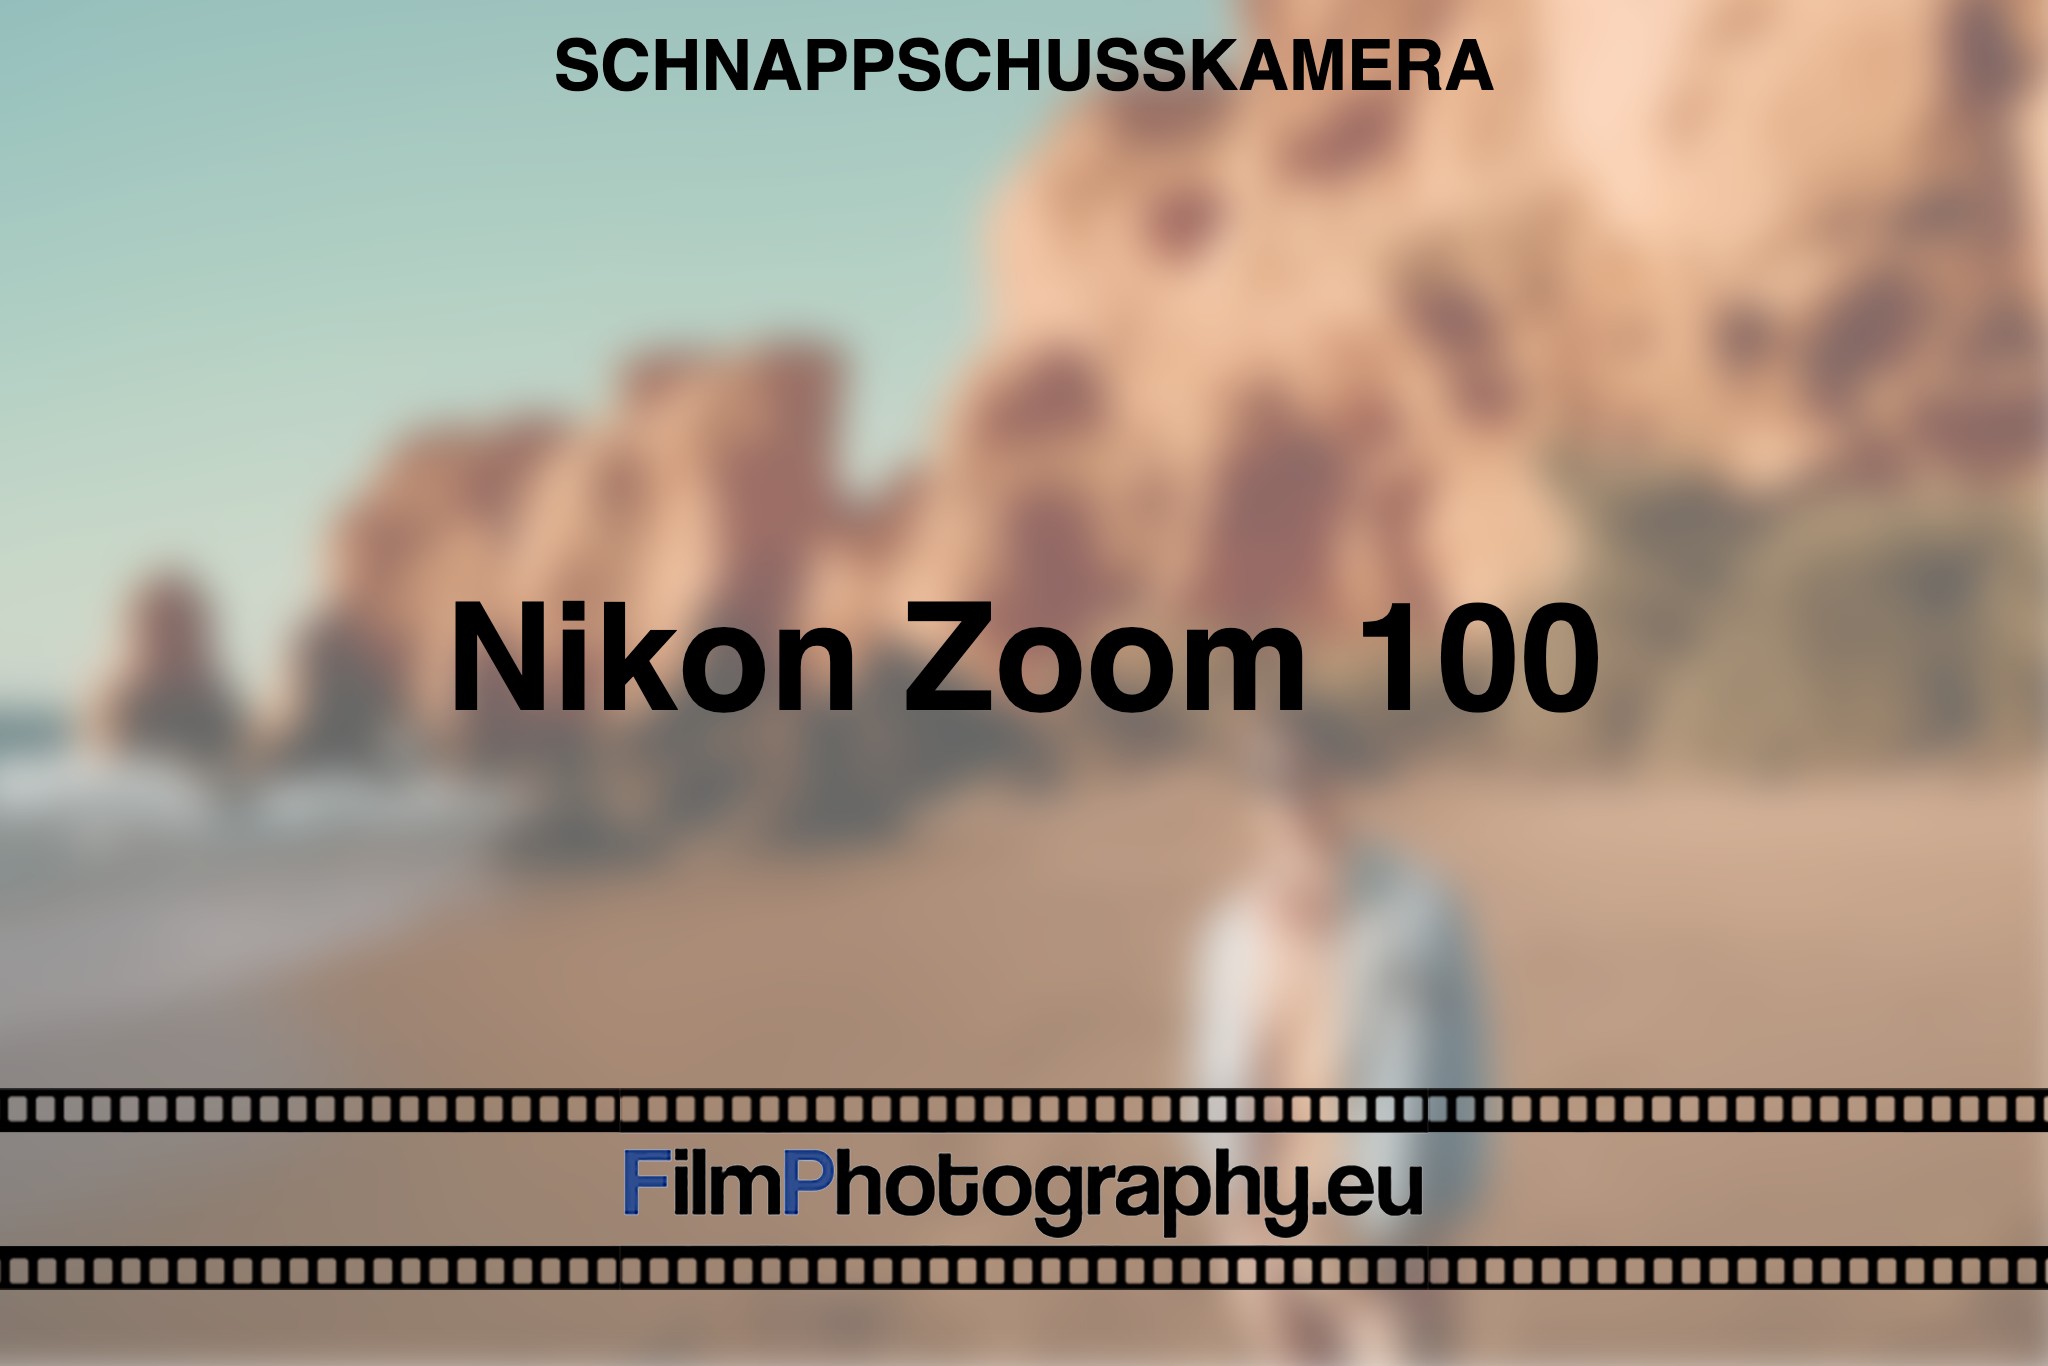 nikon-zoom-100-schnappschusskamera-bnv